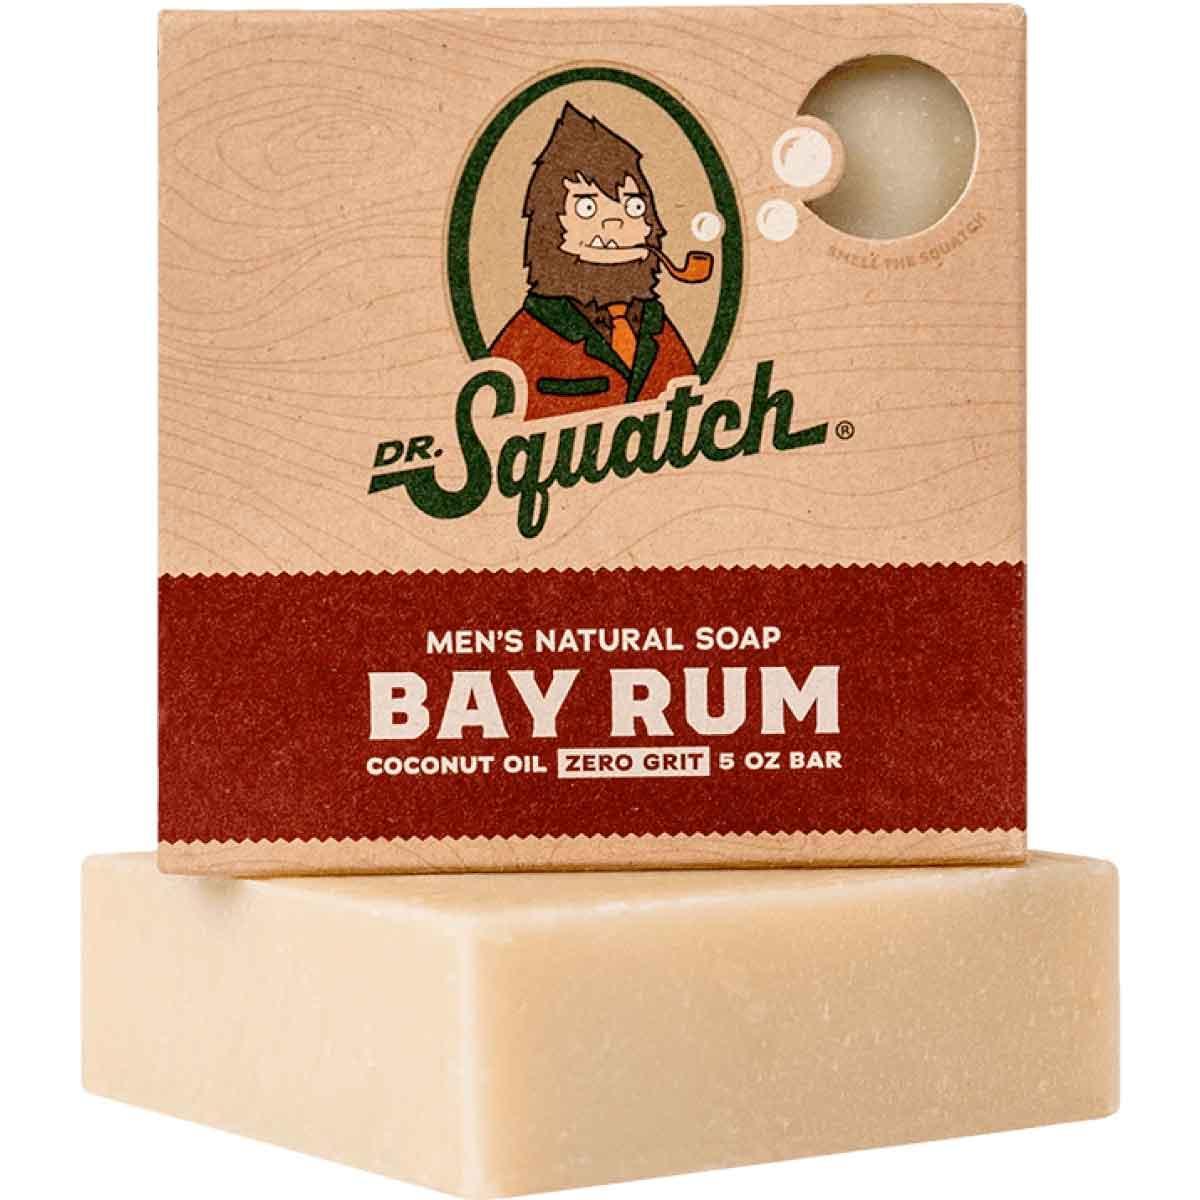 Dr. Squatch All Natural Bar Soap for Men, 3 Bar Variety Pack, Pine Tar,  Cedar Citrus and Cool Fresh Aloe